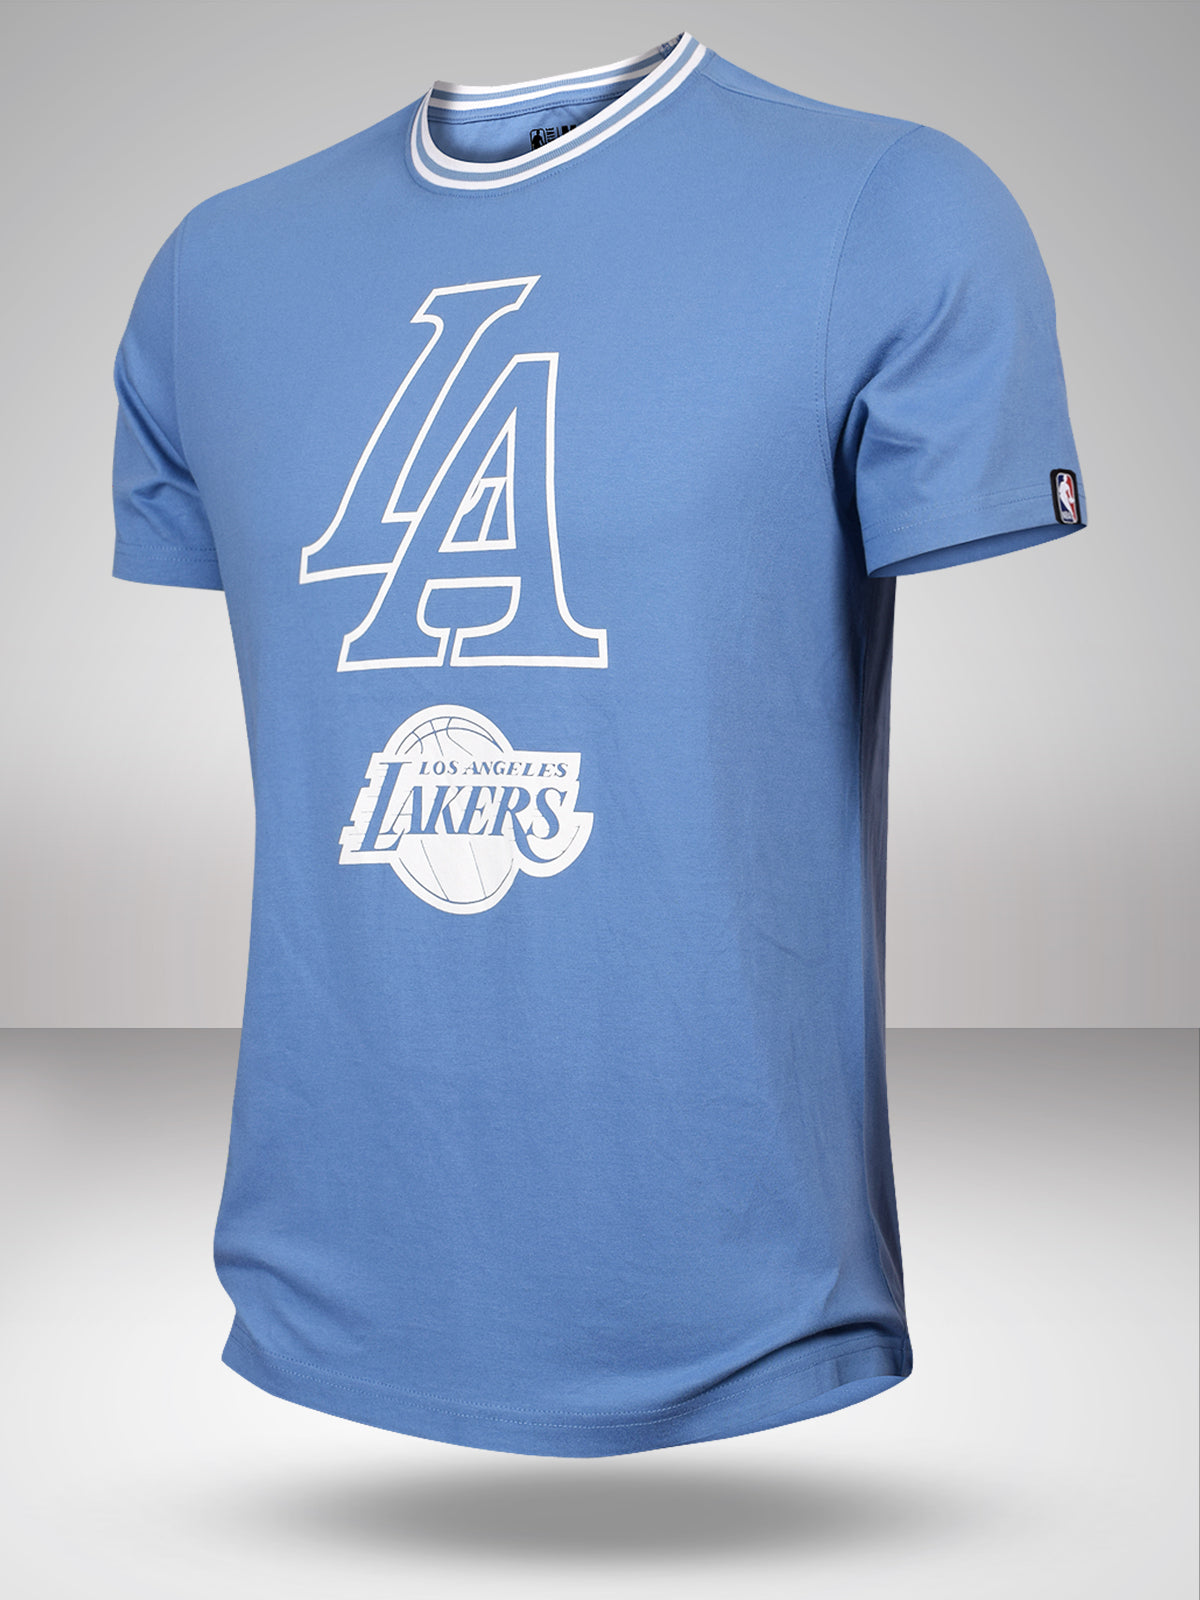 Buy Shop The Arena: NBA: Los Angeles Lakers: City Men's T-Shirt